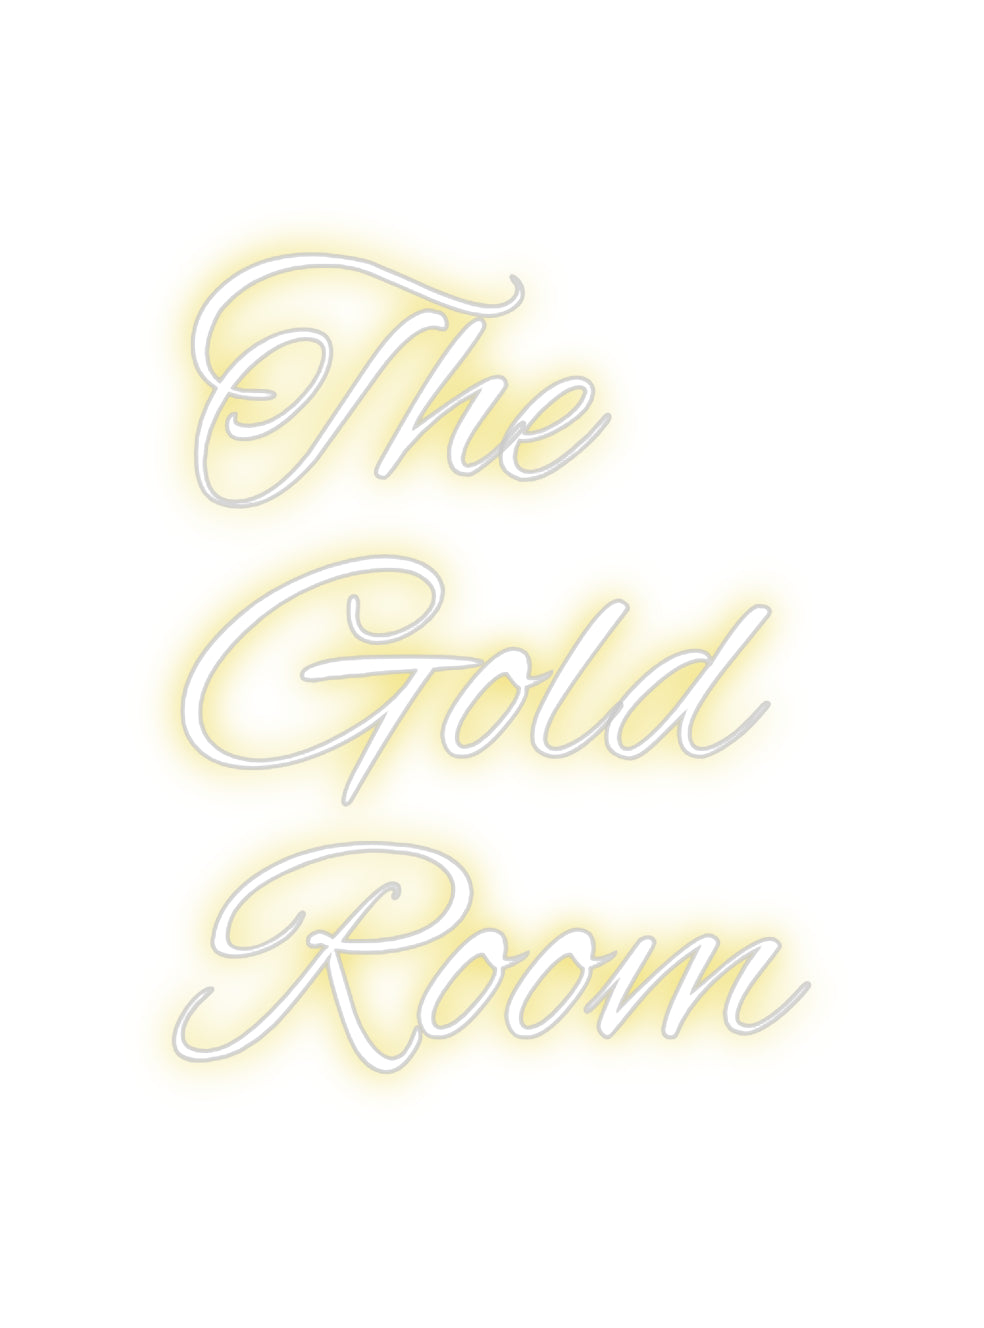 Custom neon sign The
Gold
Room